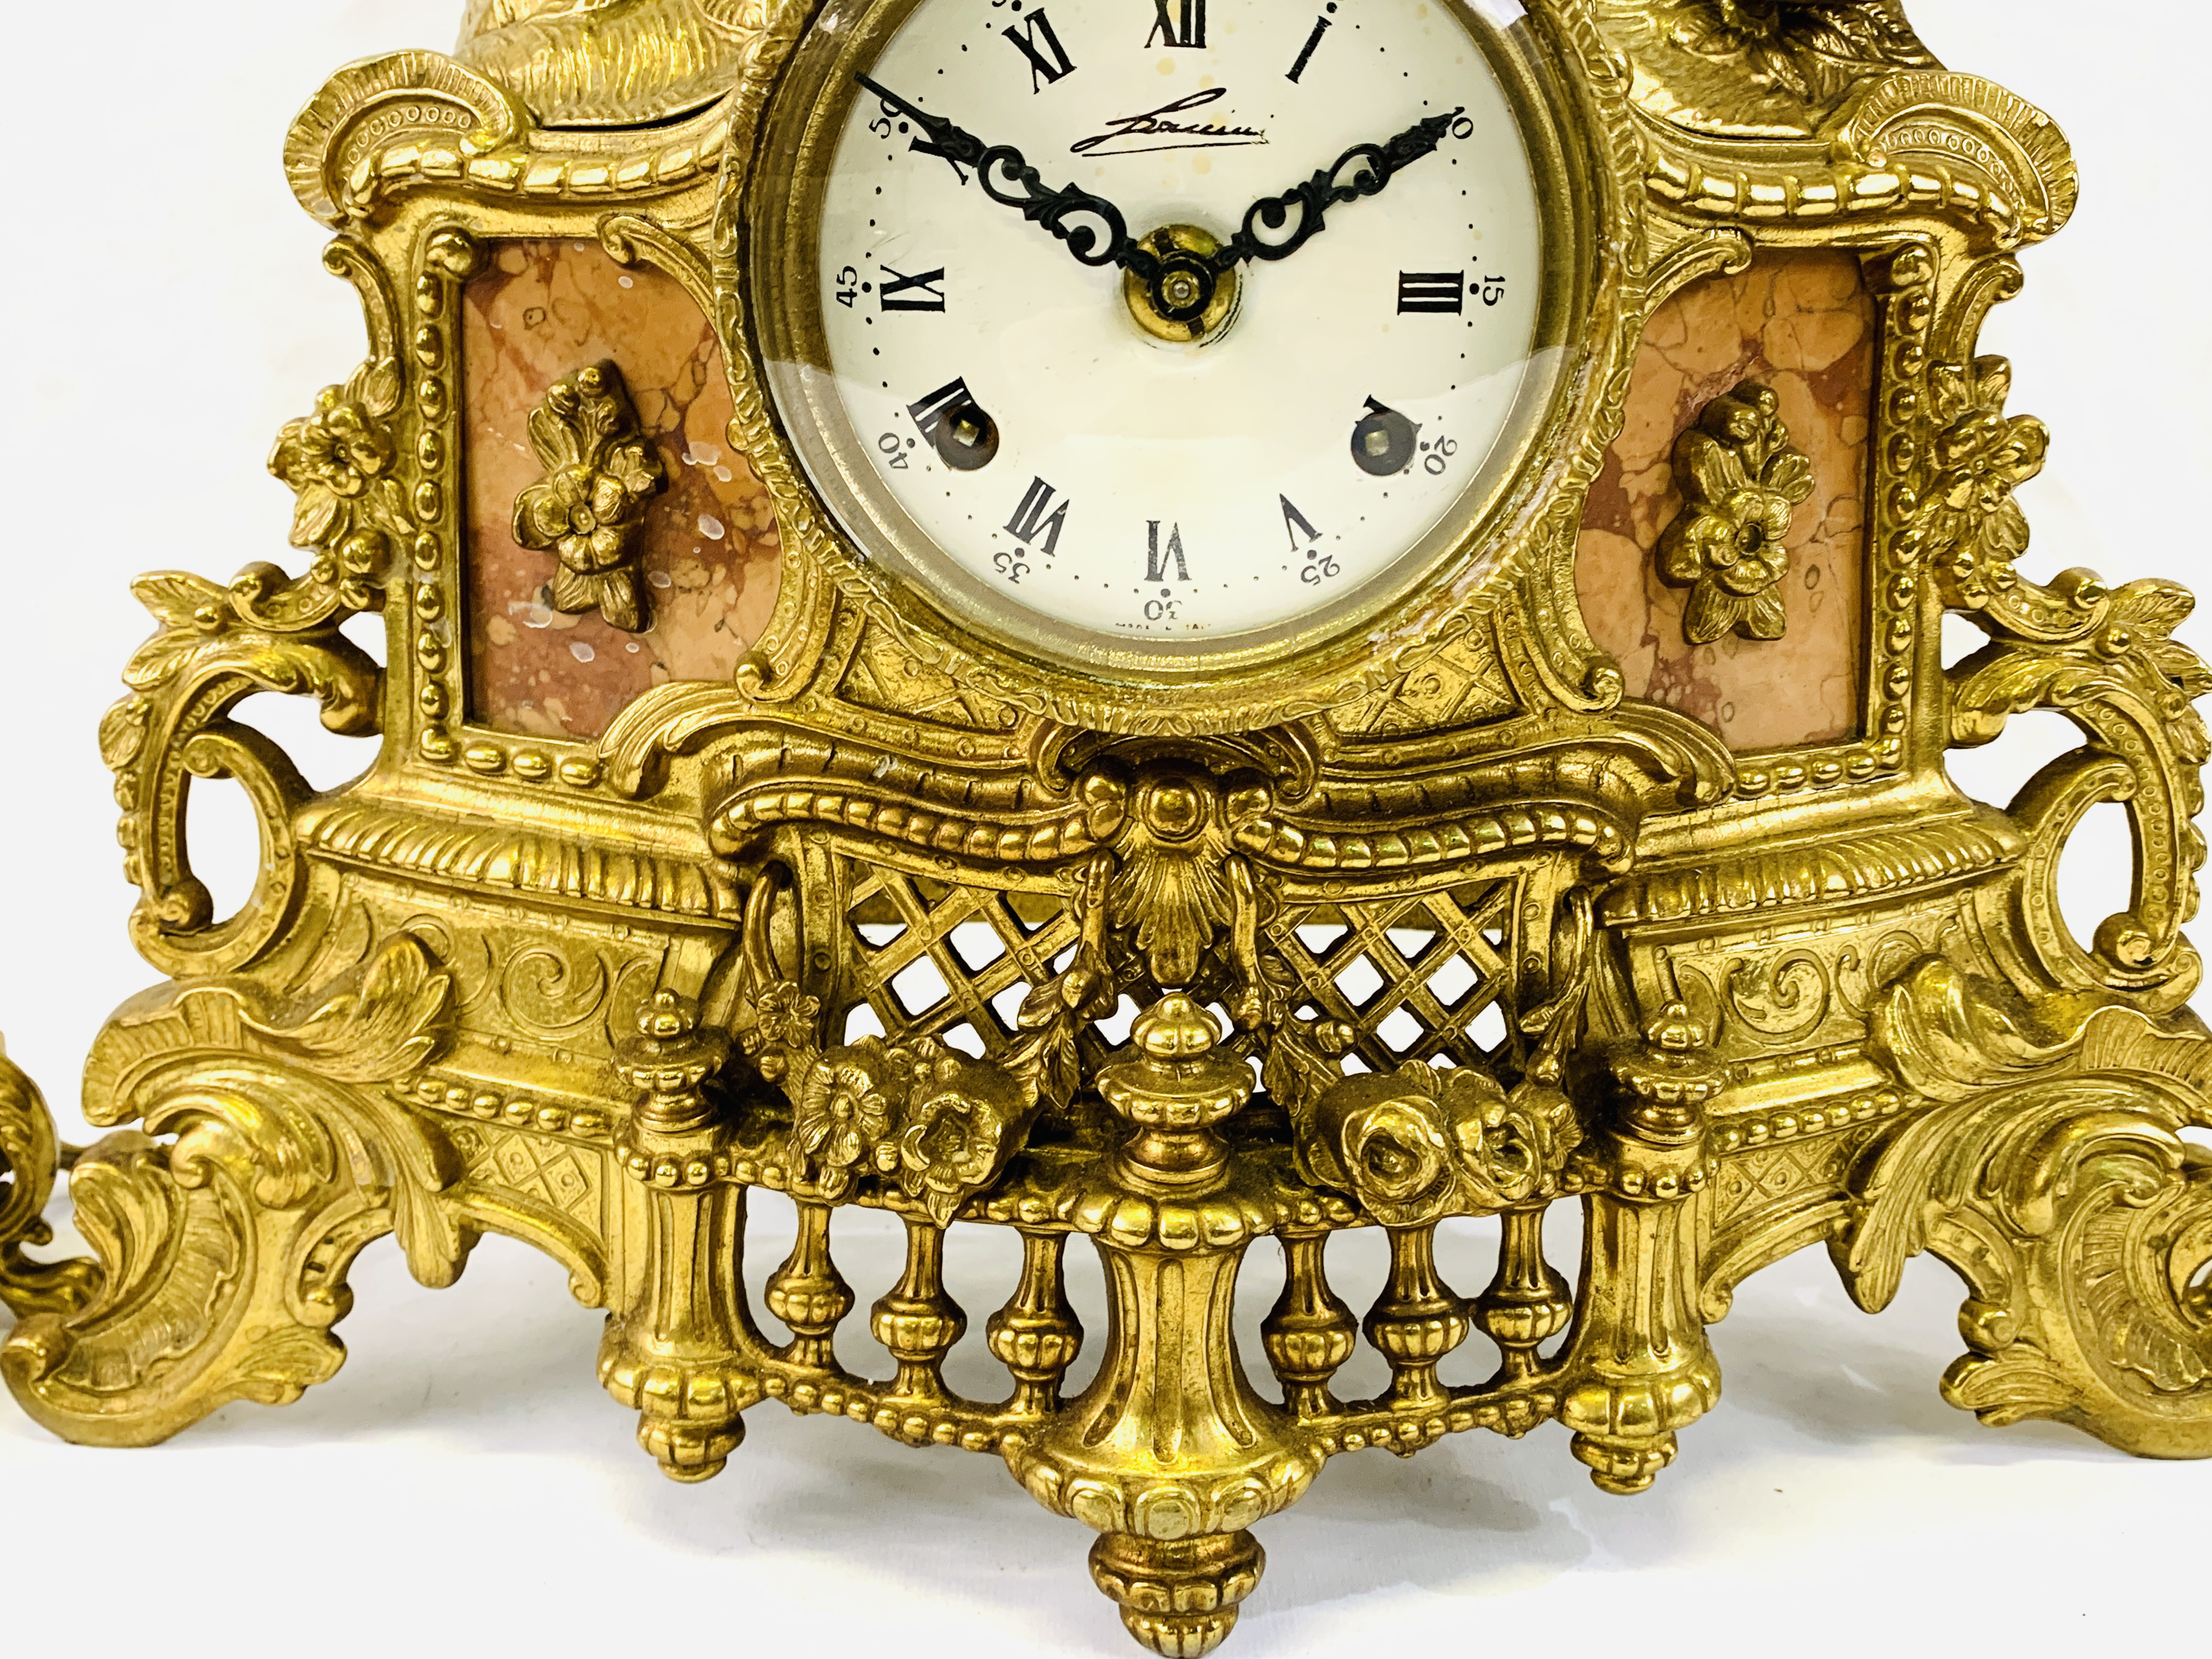 A brass mantel clock and candelabra garniture set - Image 4 of 8